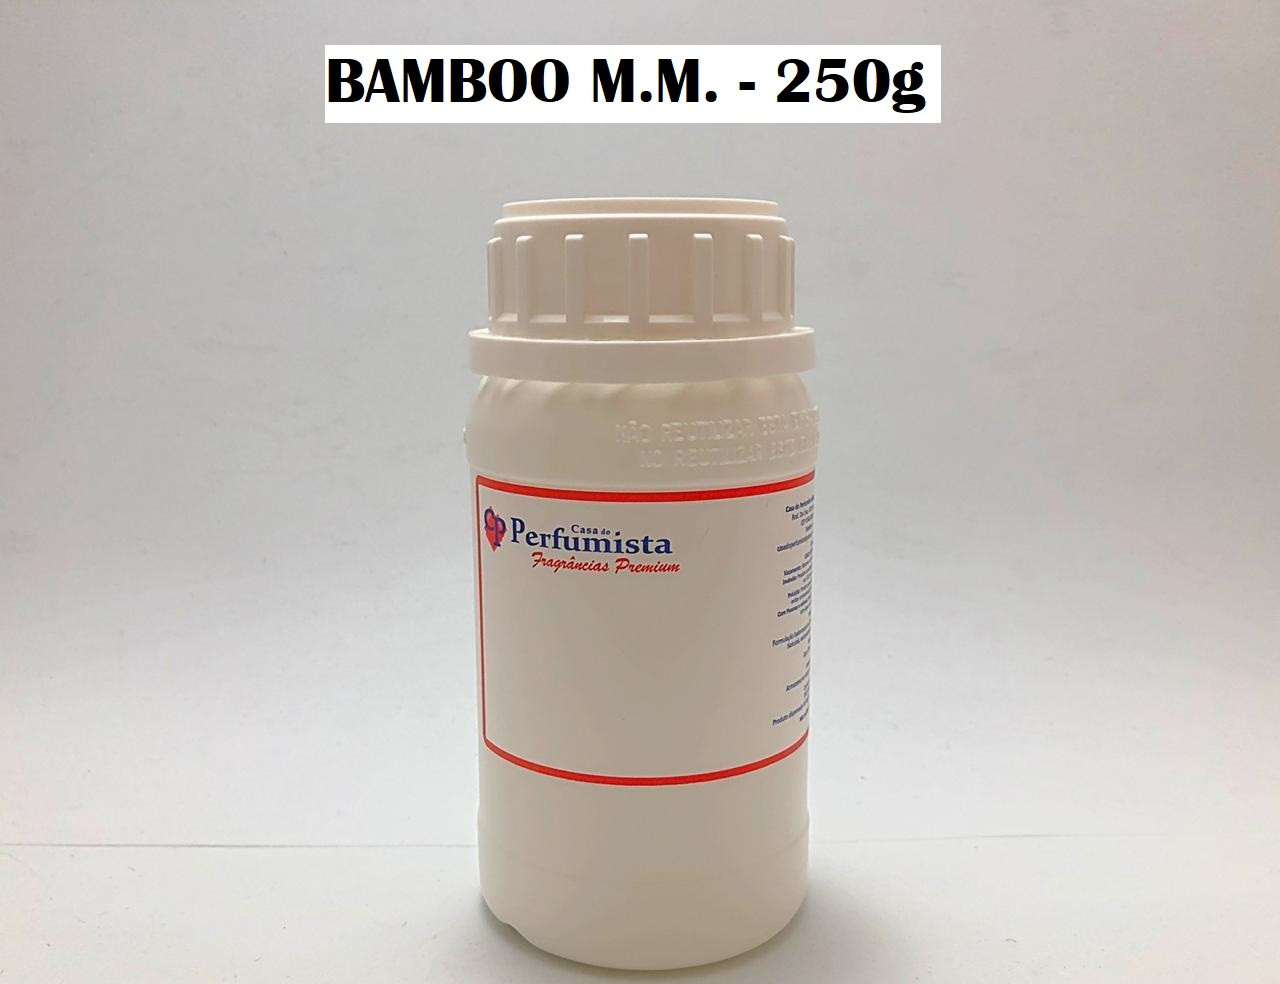 BAMBOO M.M. - 250g